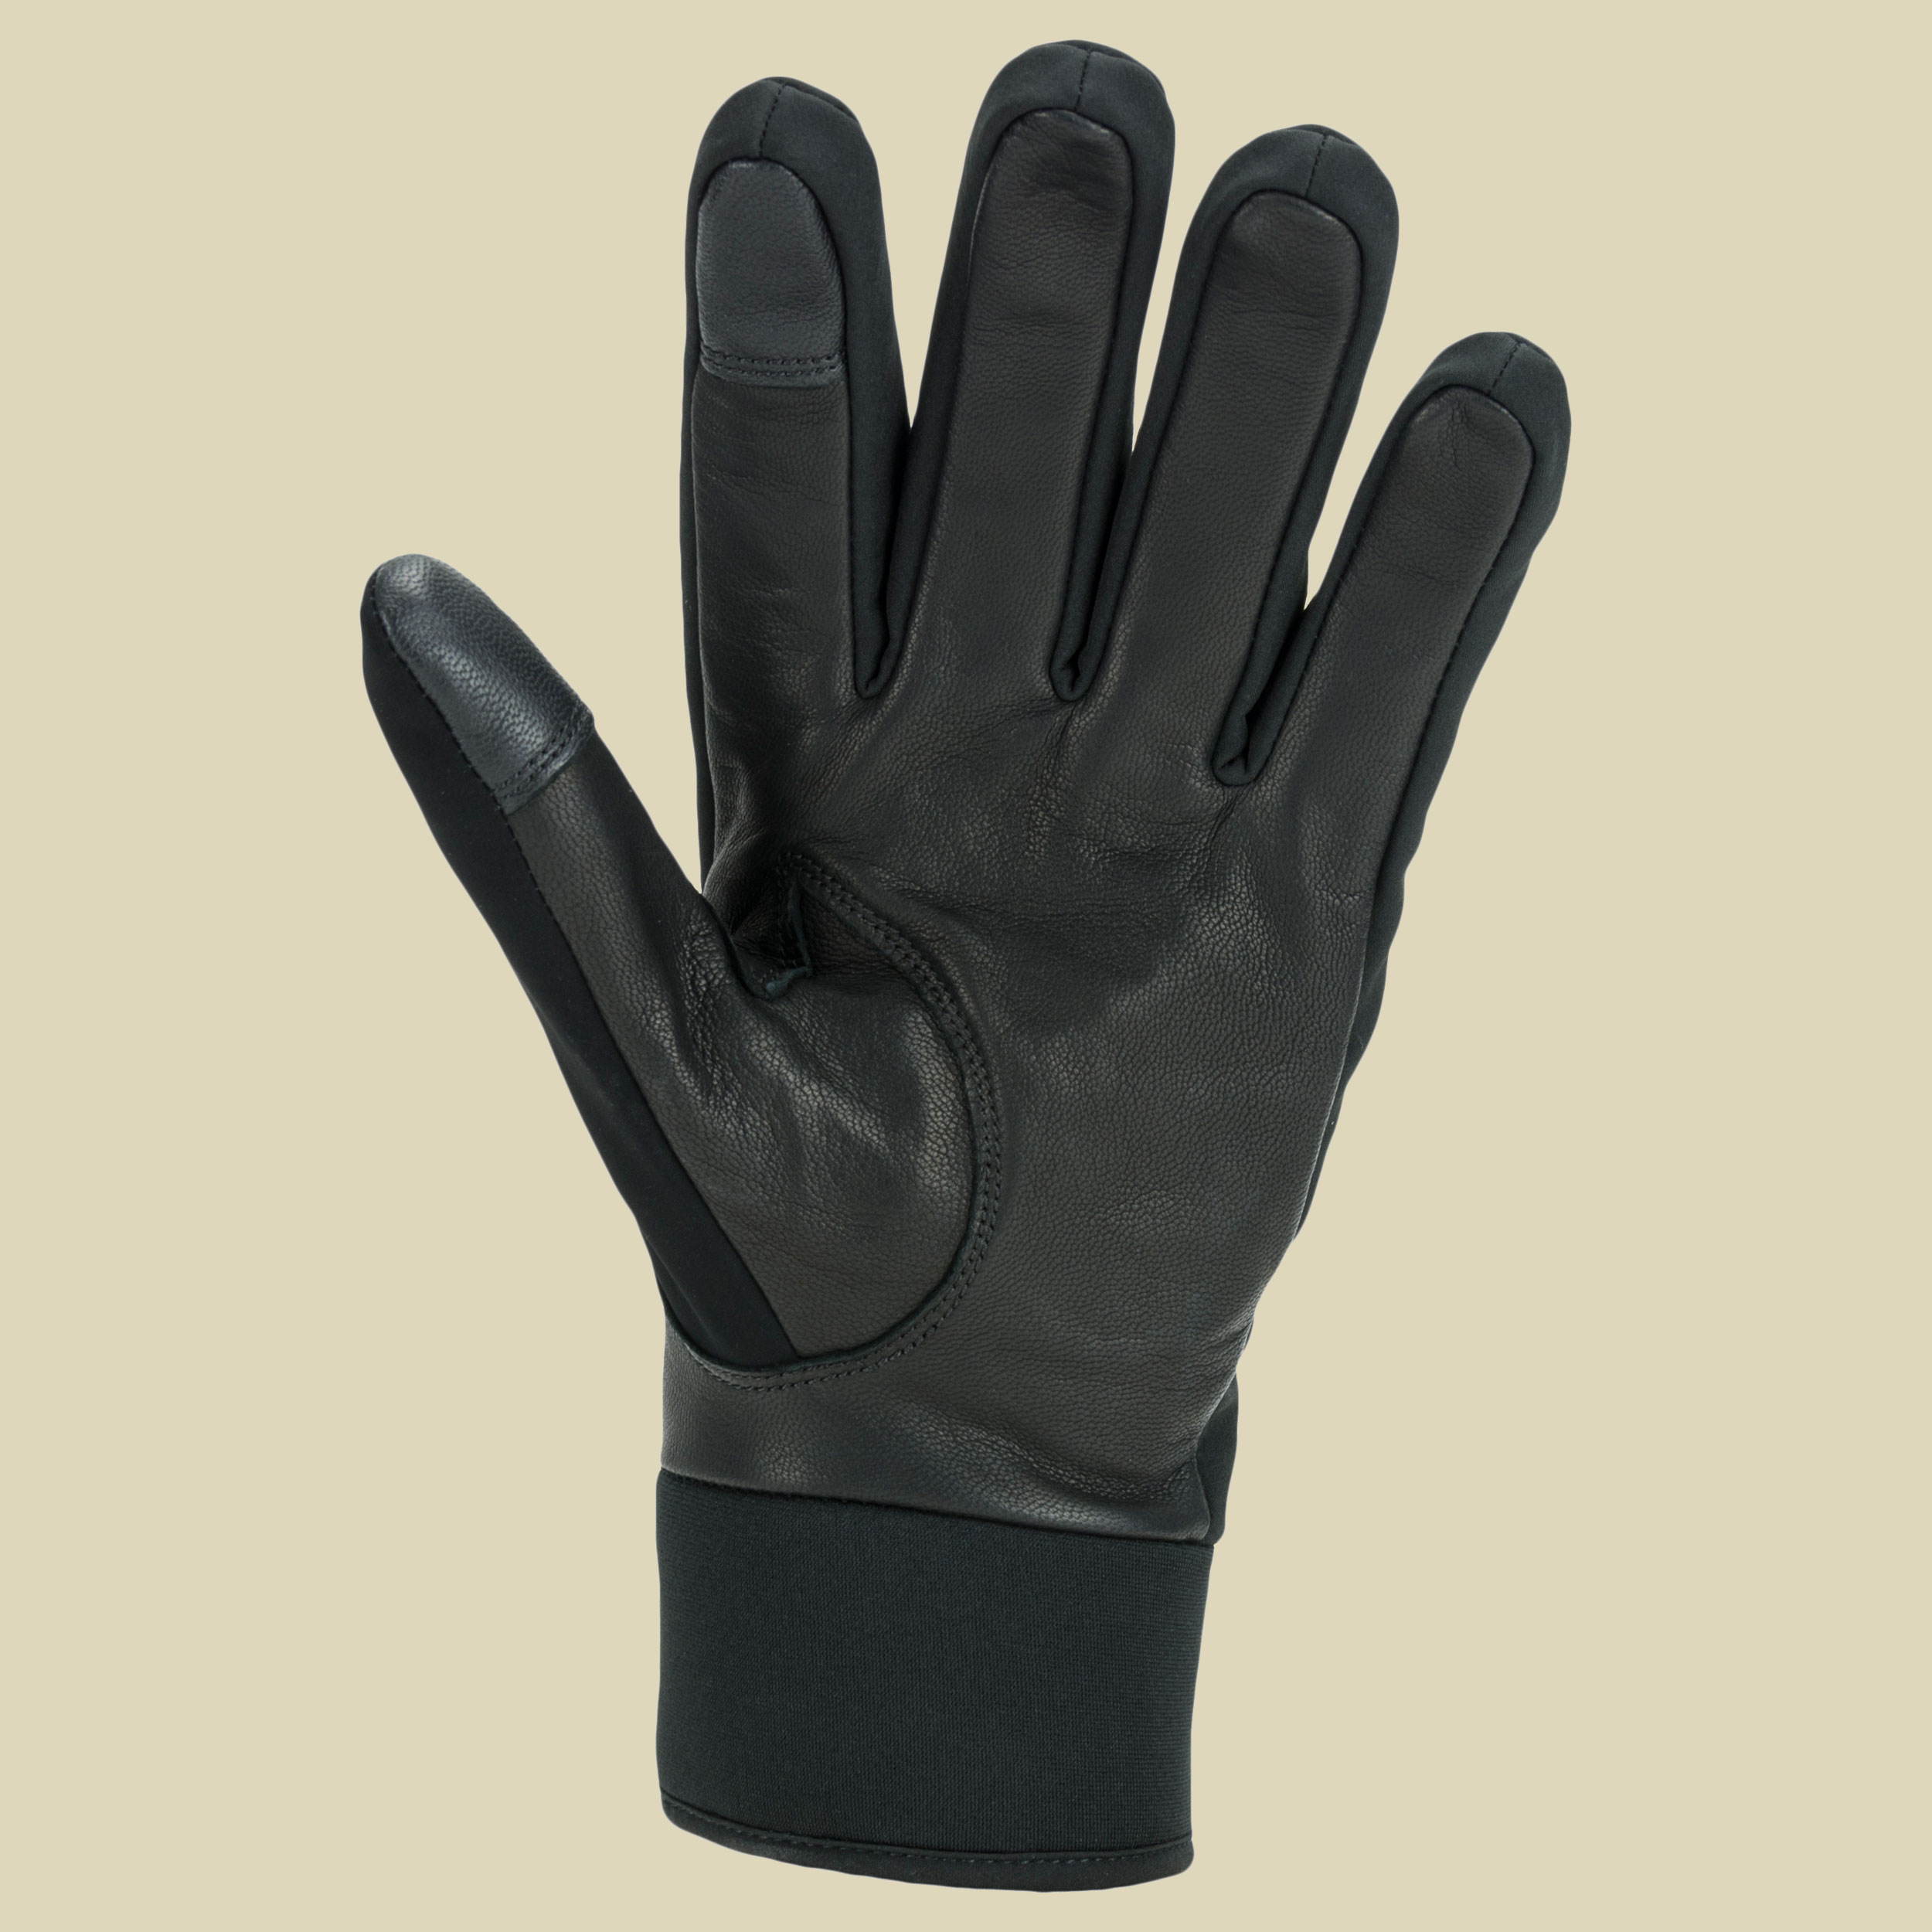 Waterproof All Weather Insulated Glove Größe XL Farbe black